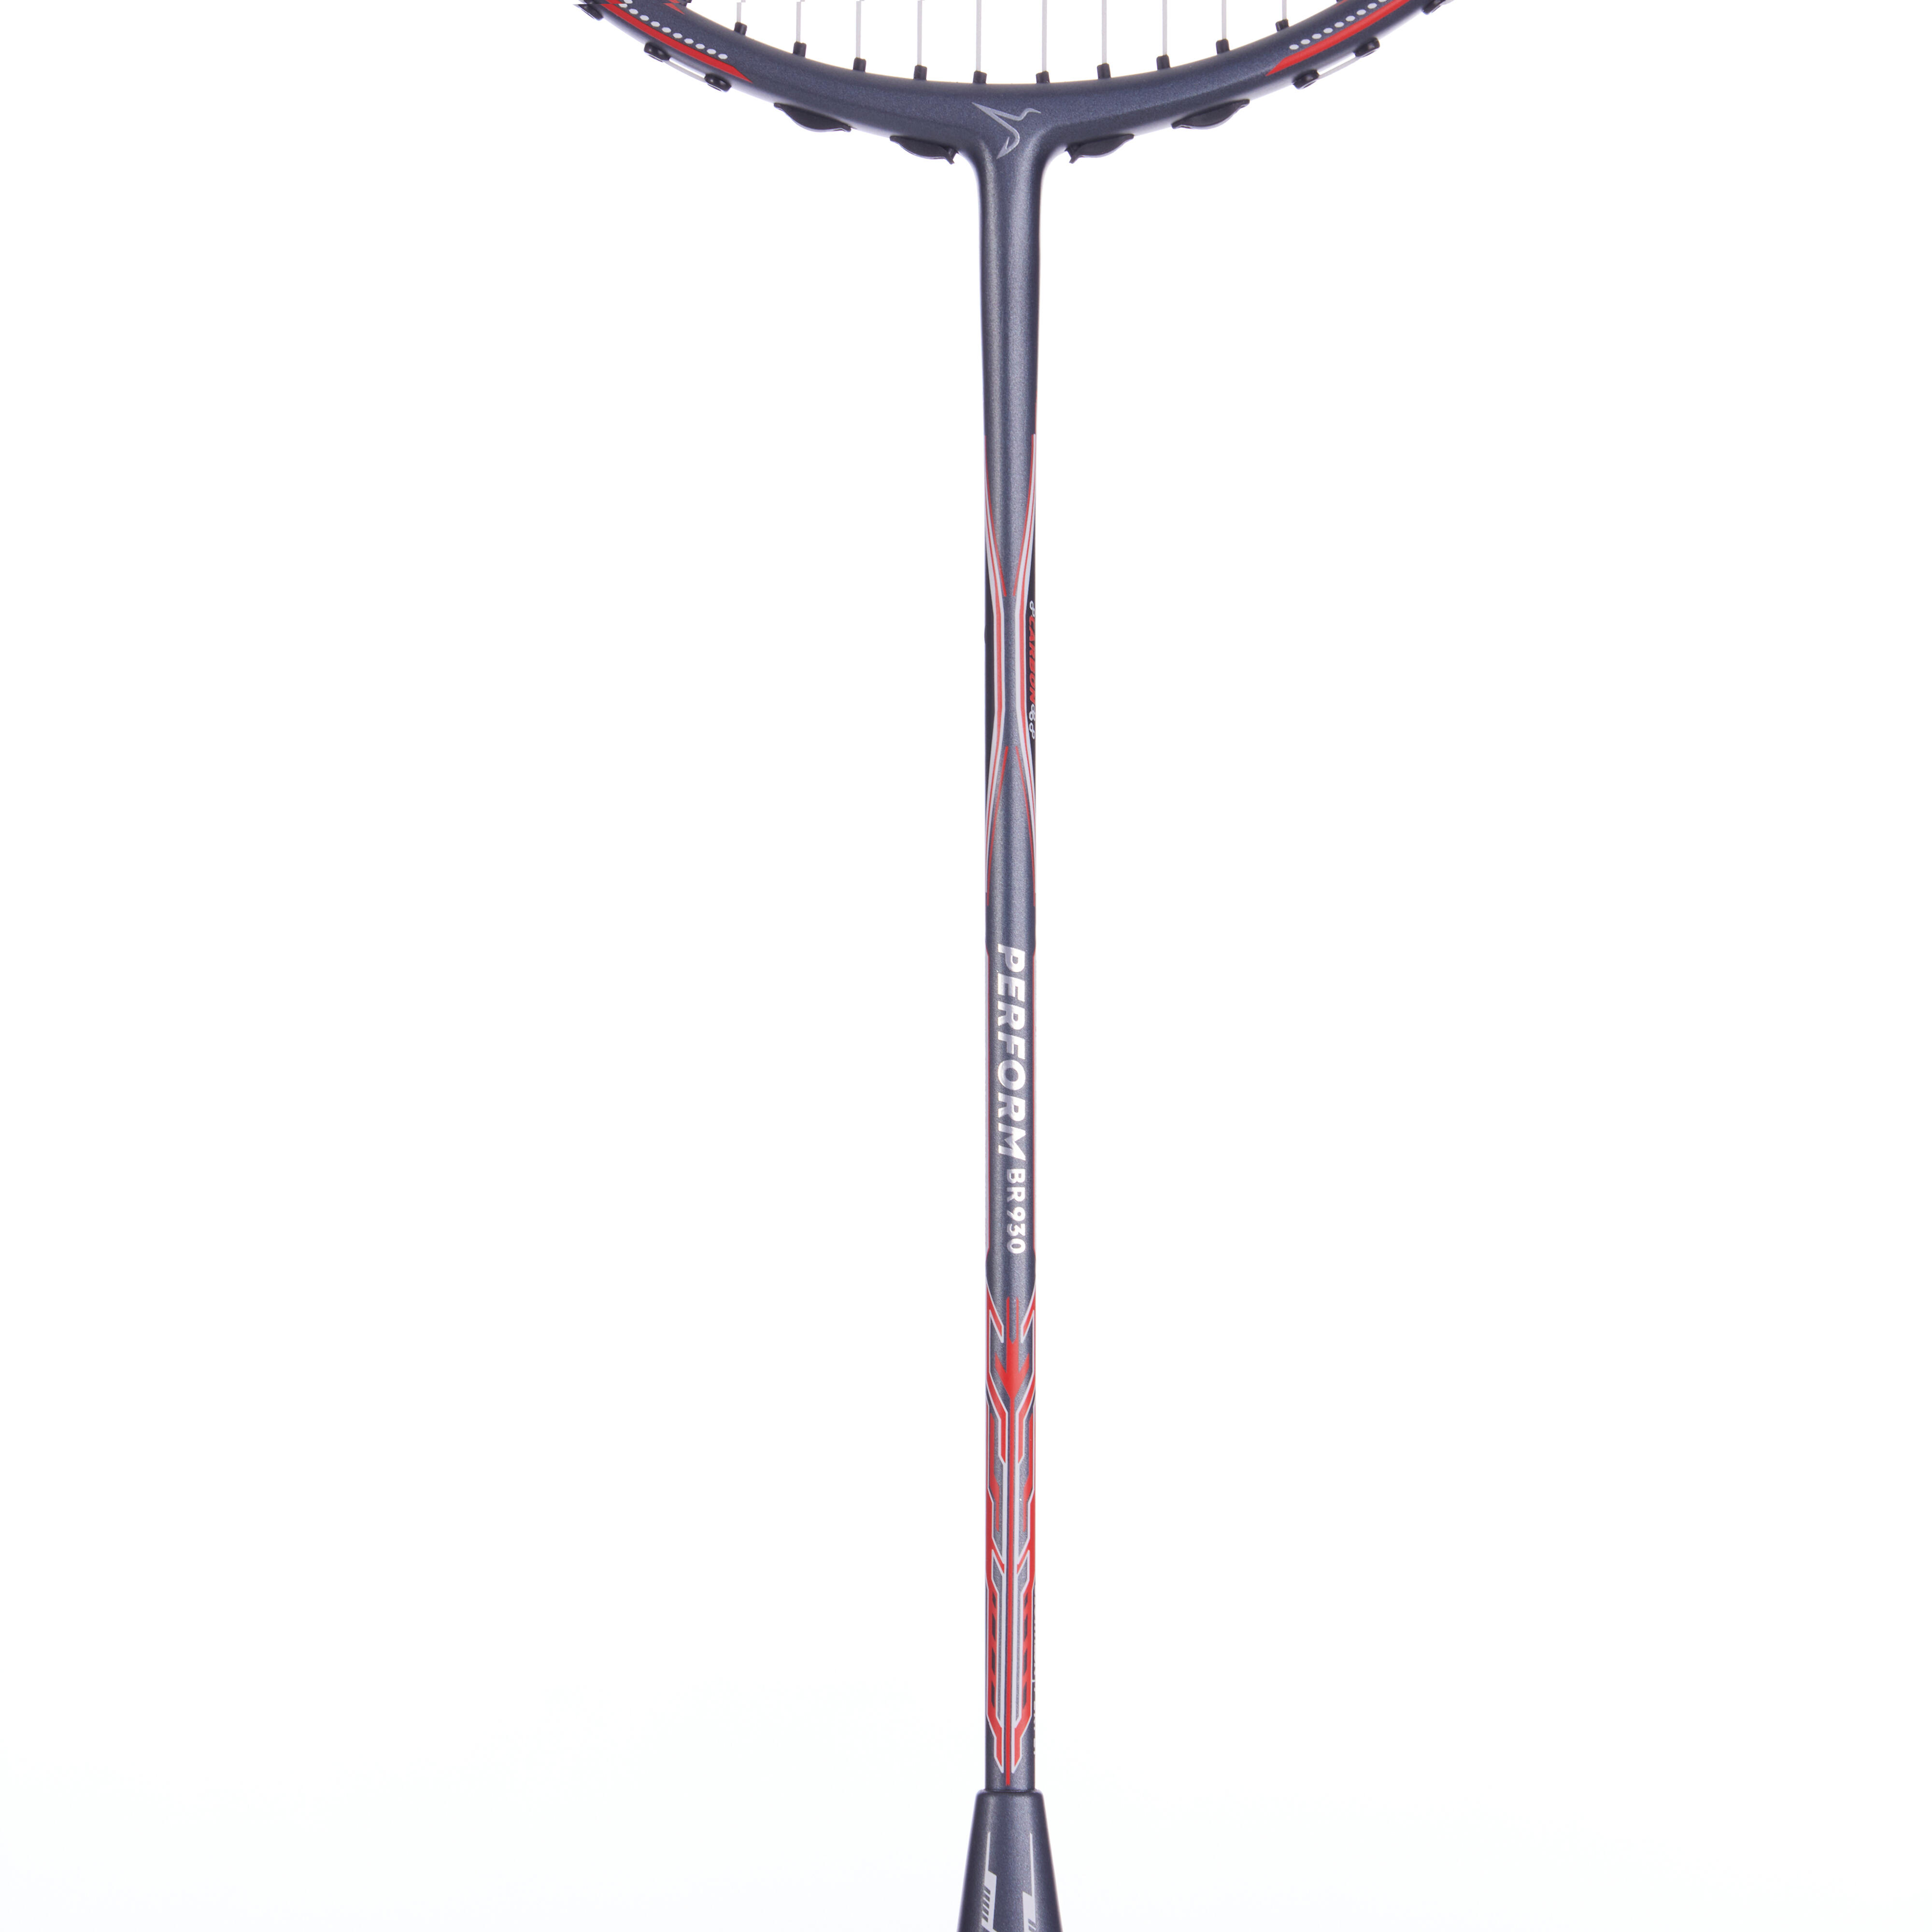 Badminton Racket - BR Perform 930 Black - PERFLY